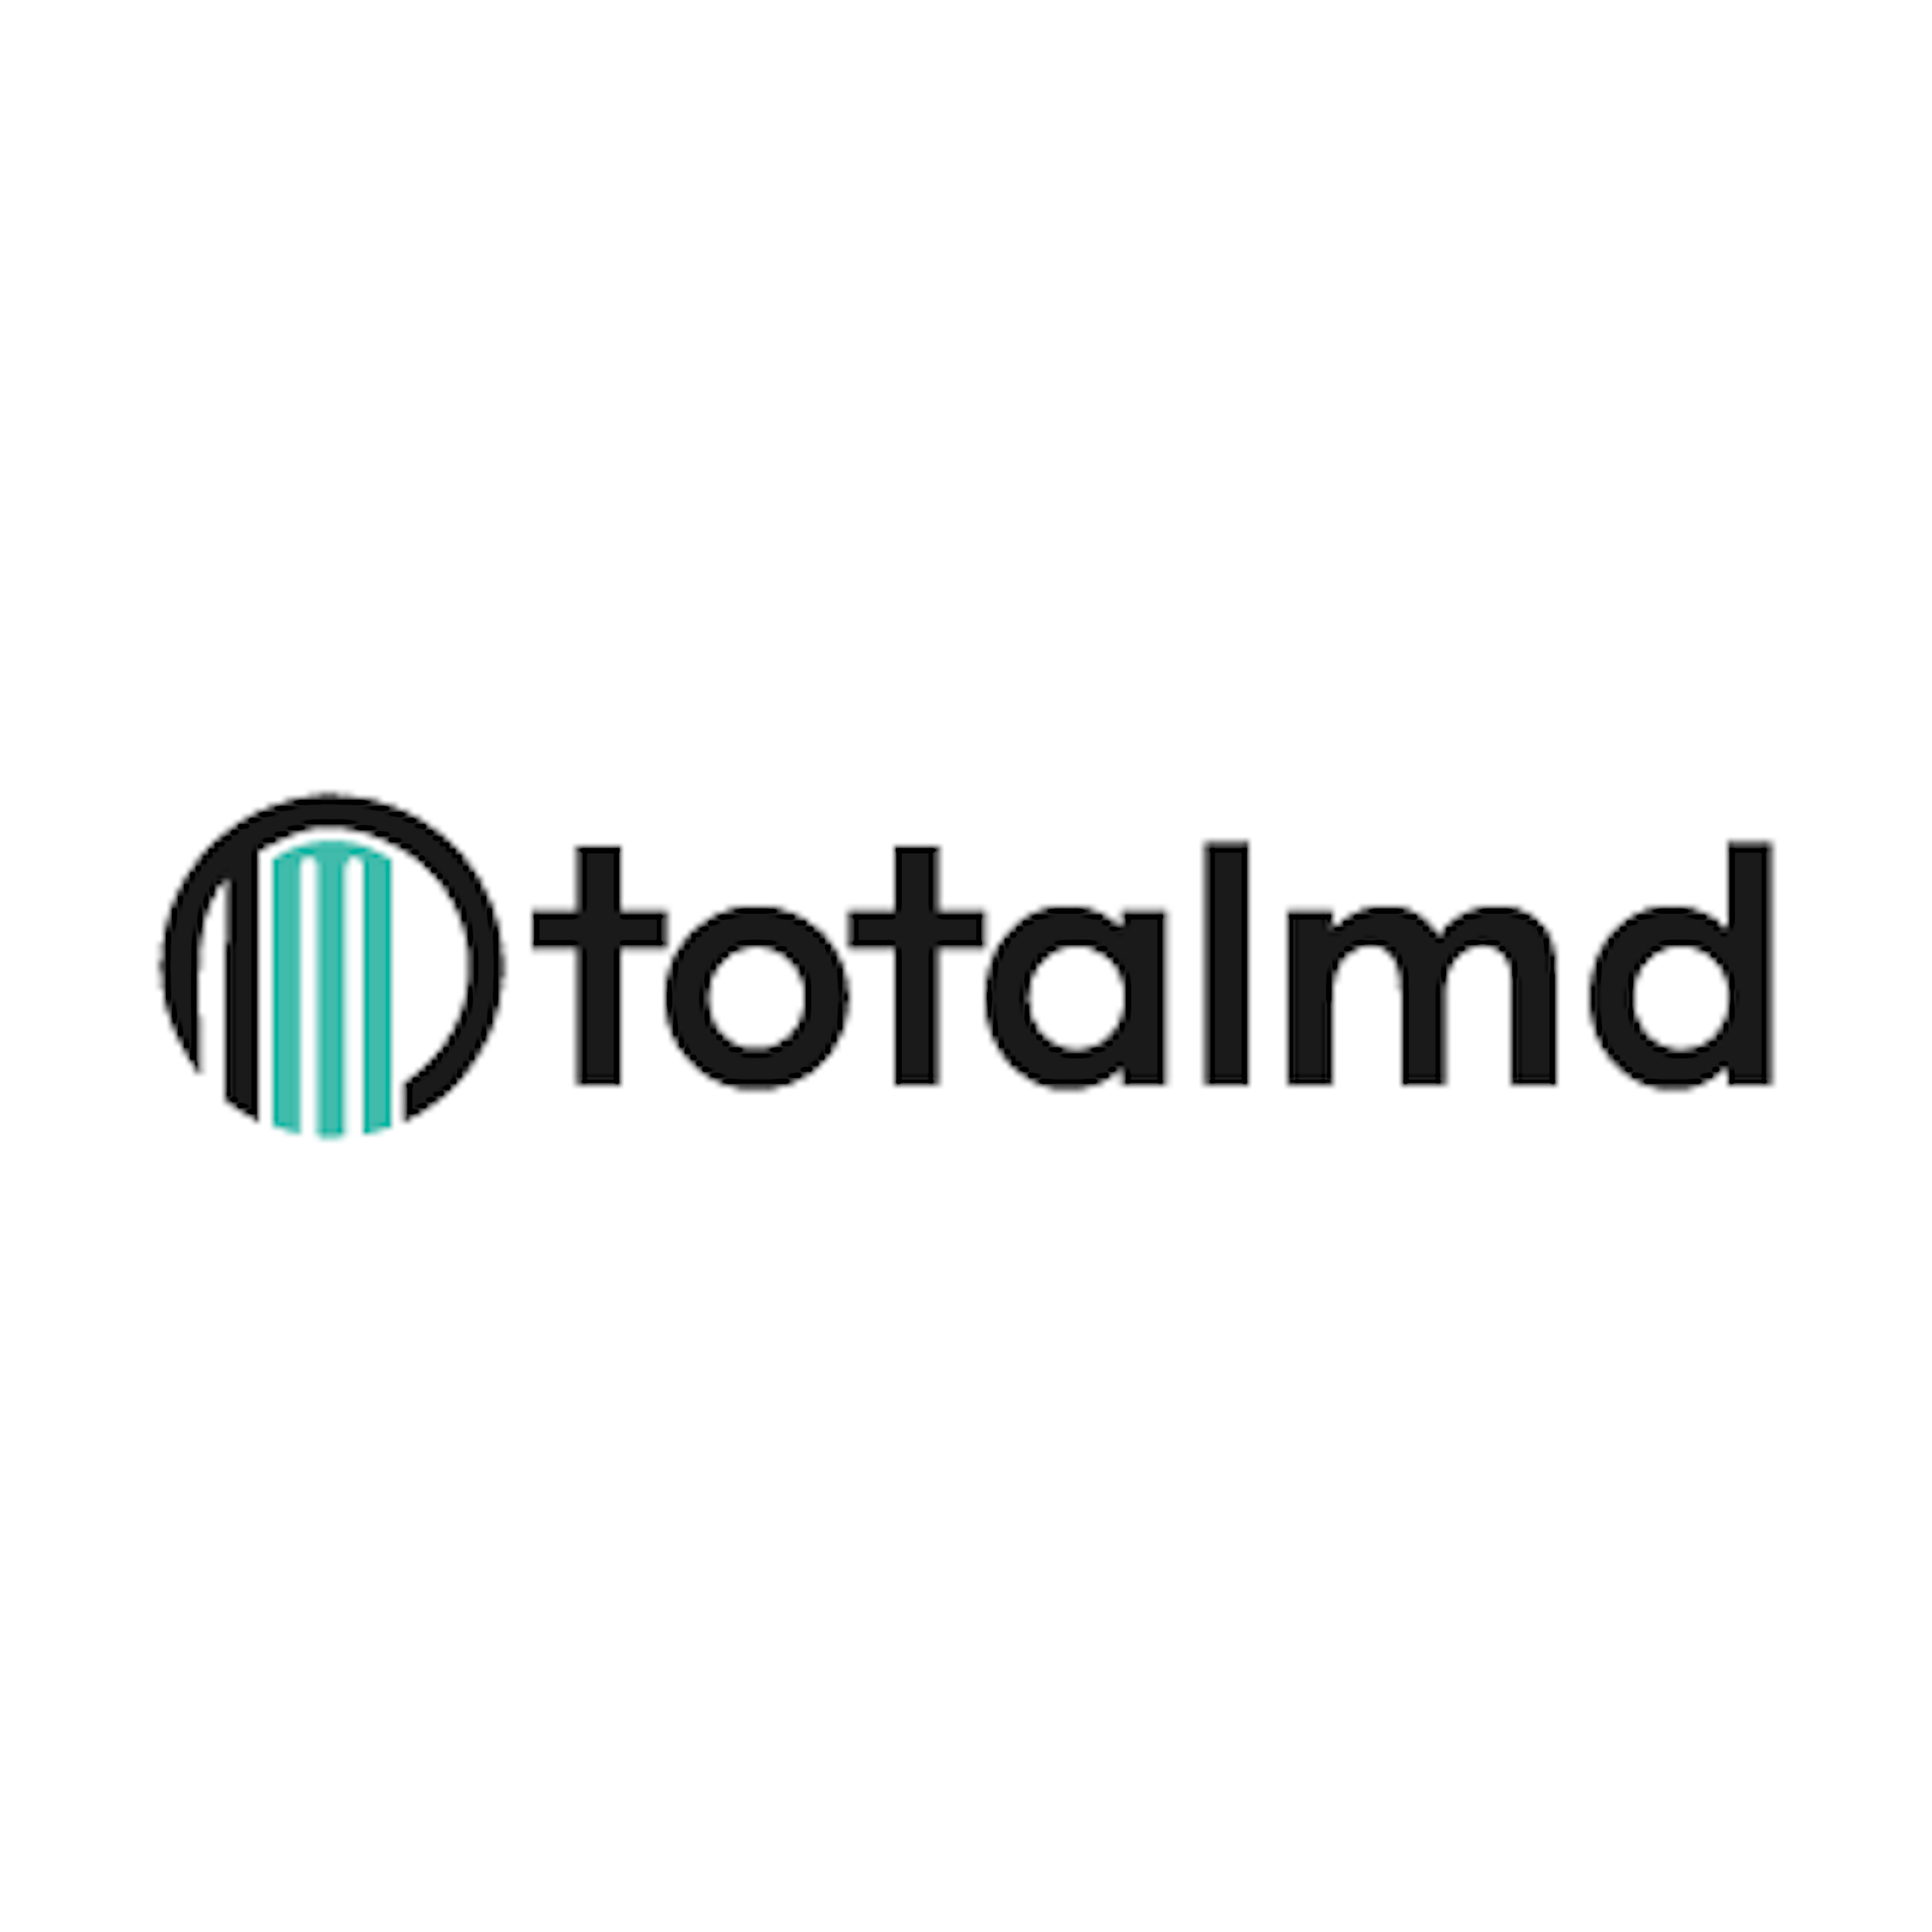 TotalMD Logo